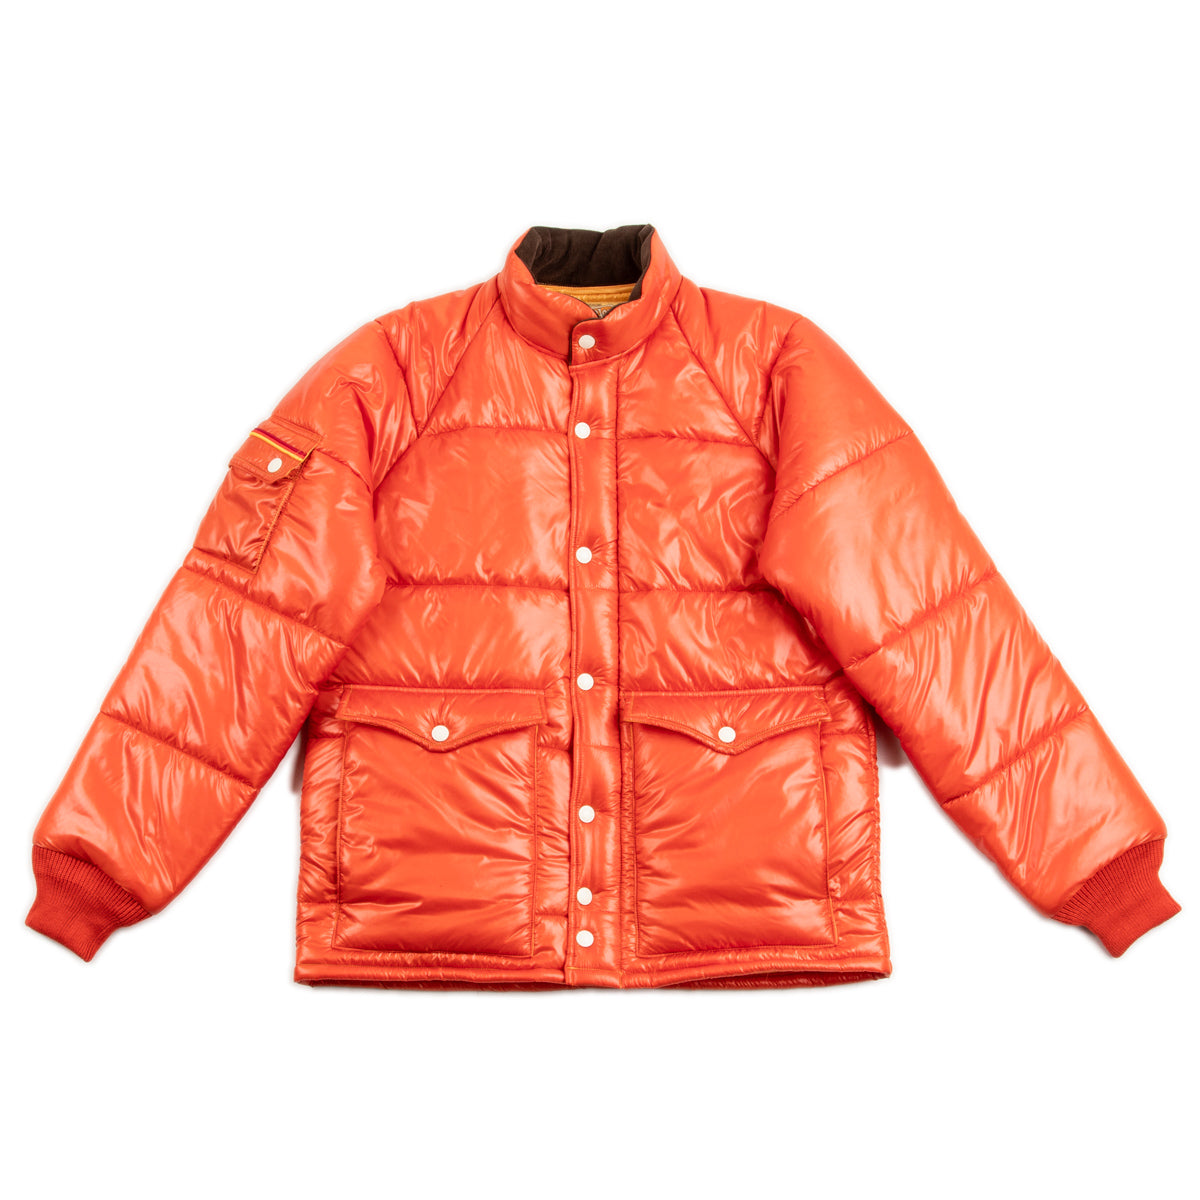 Roadeo Jacket - Orange Nylon